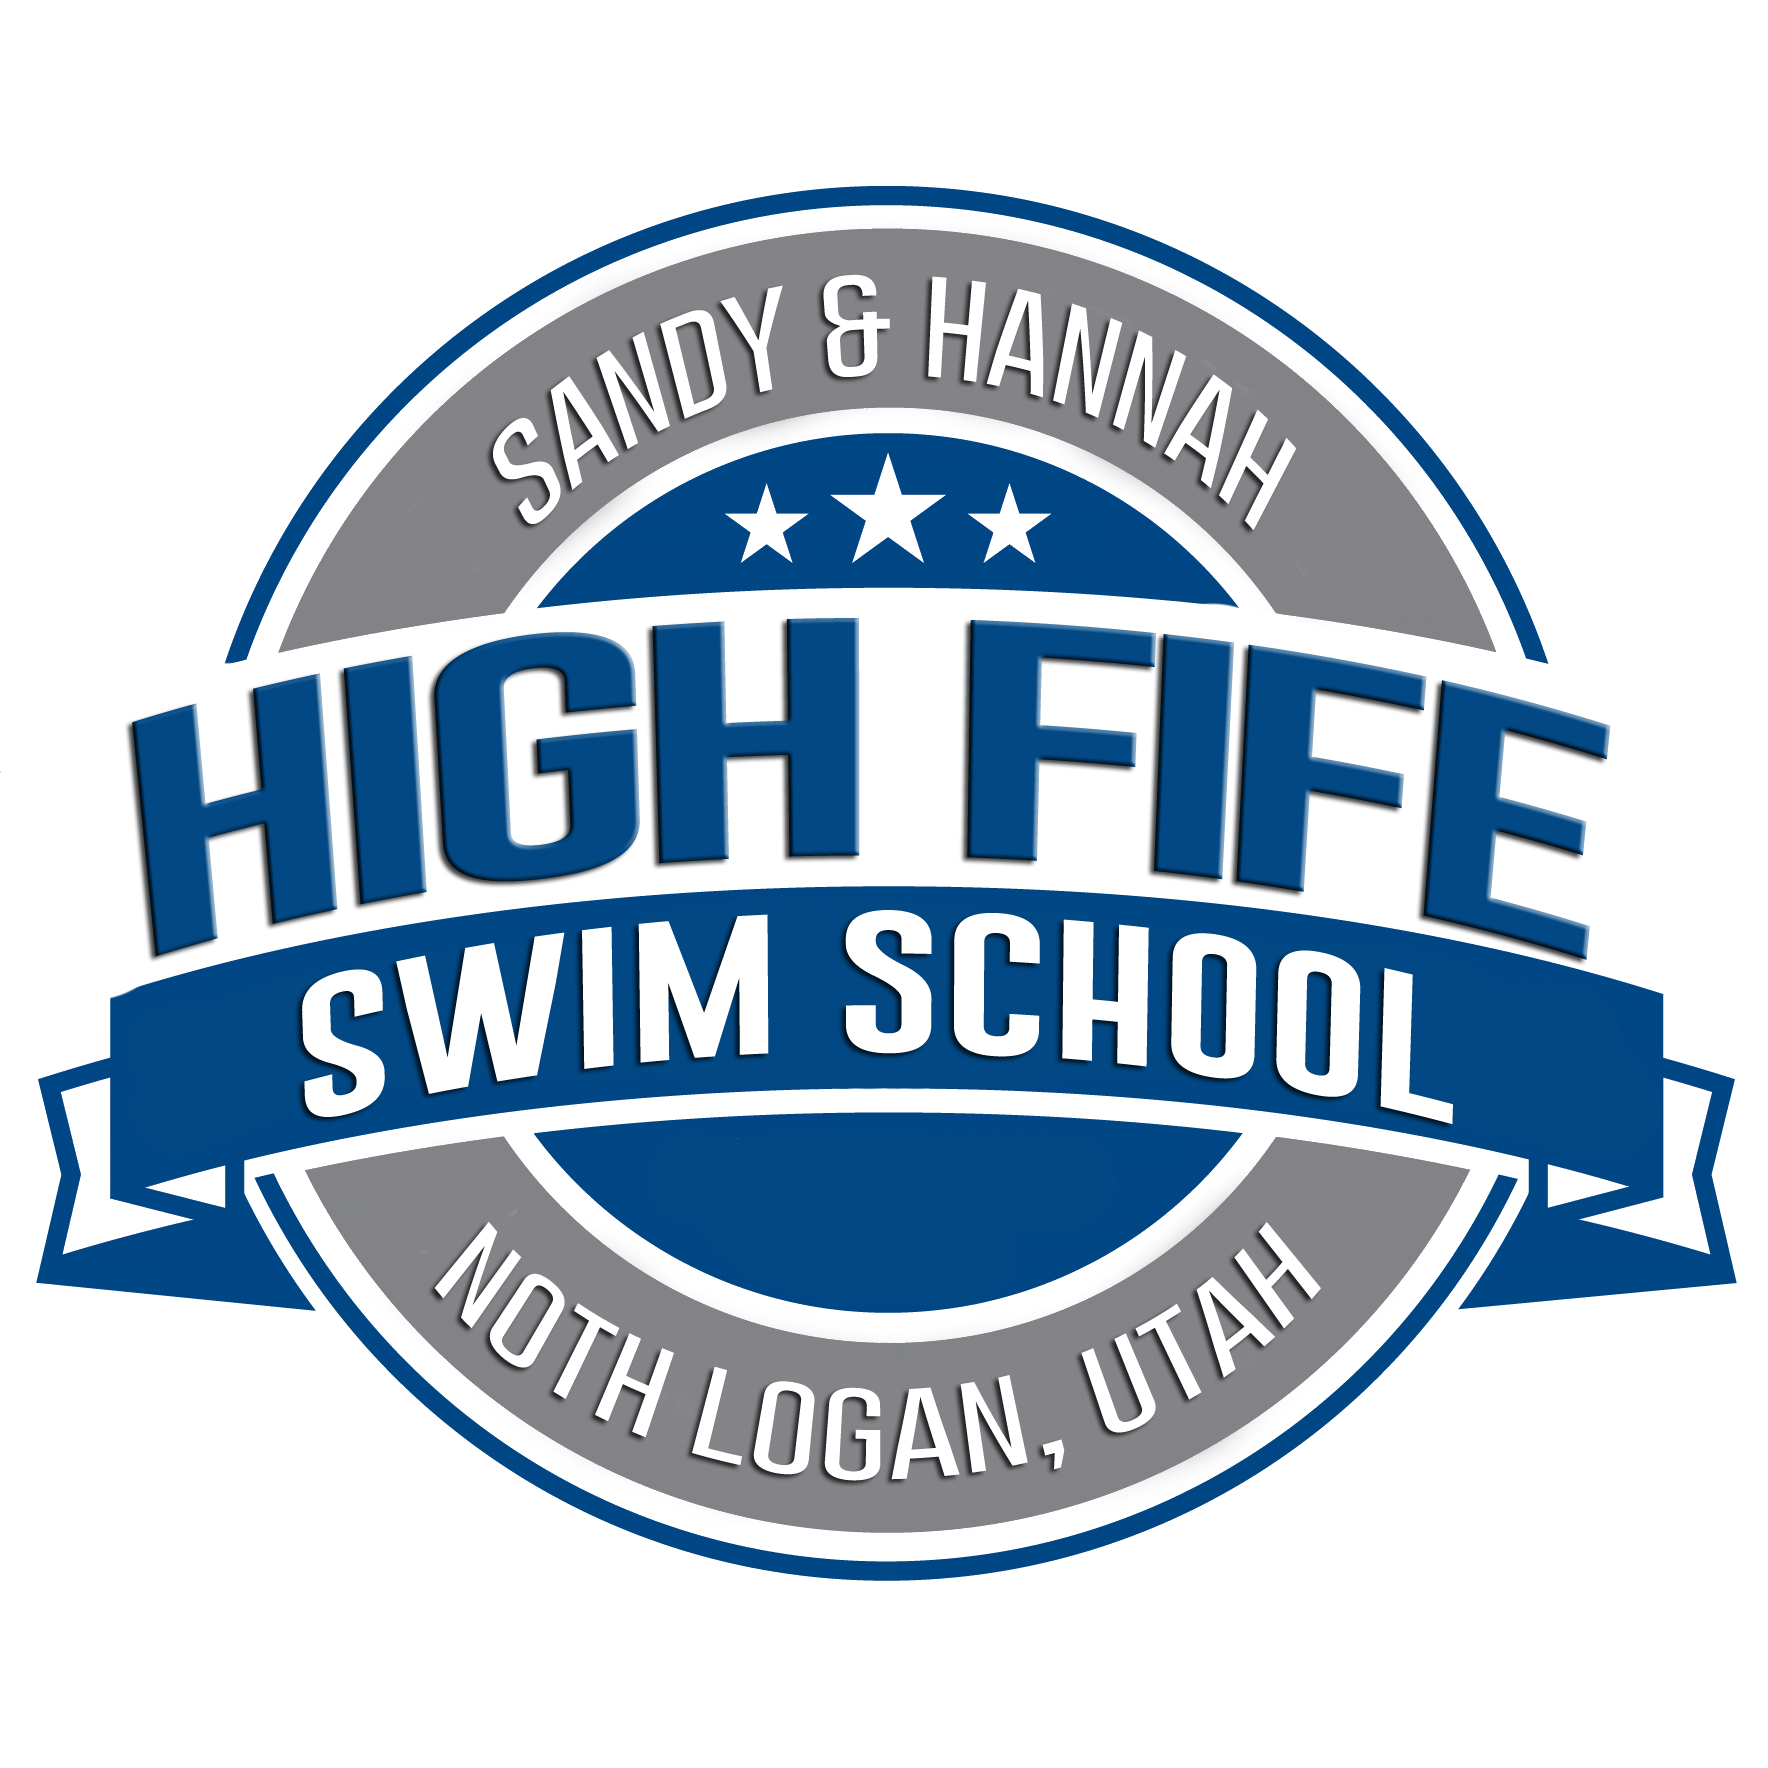 High Fife Swim School